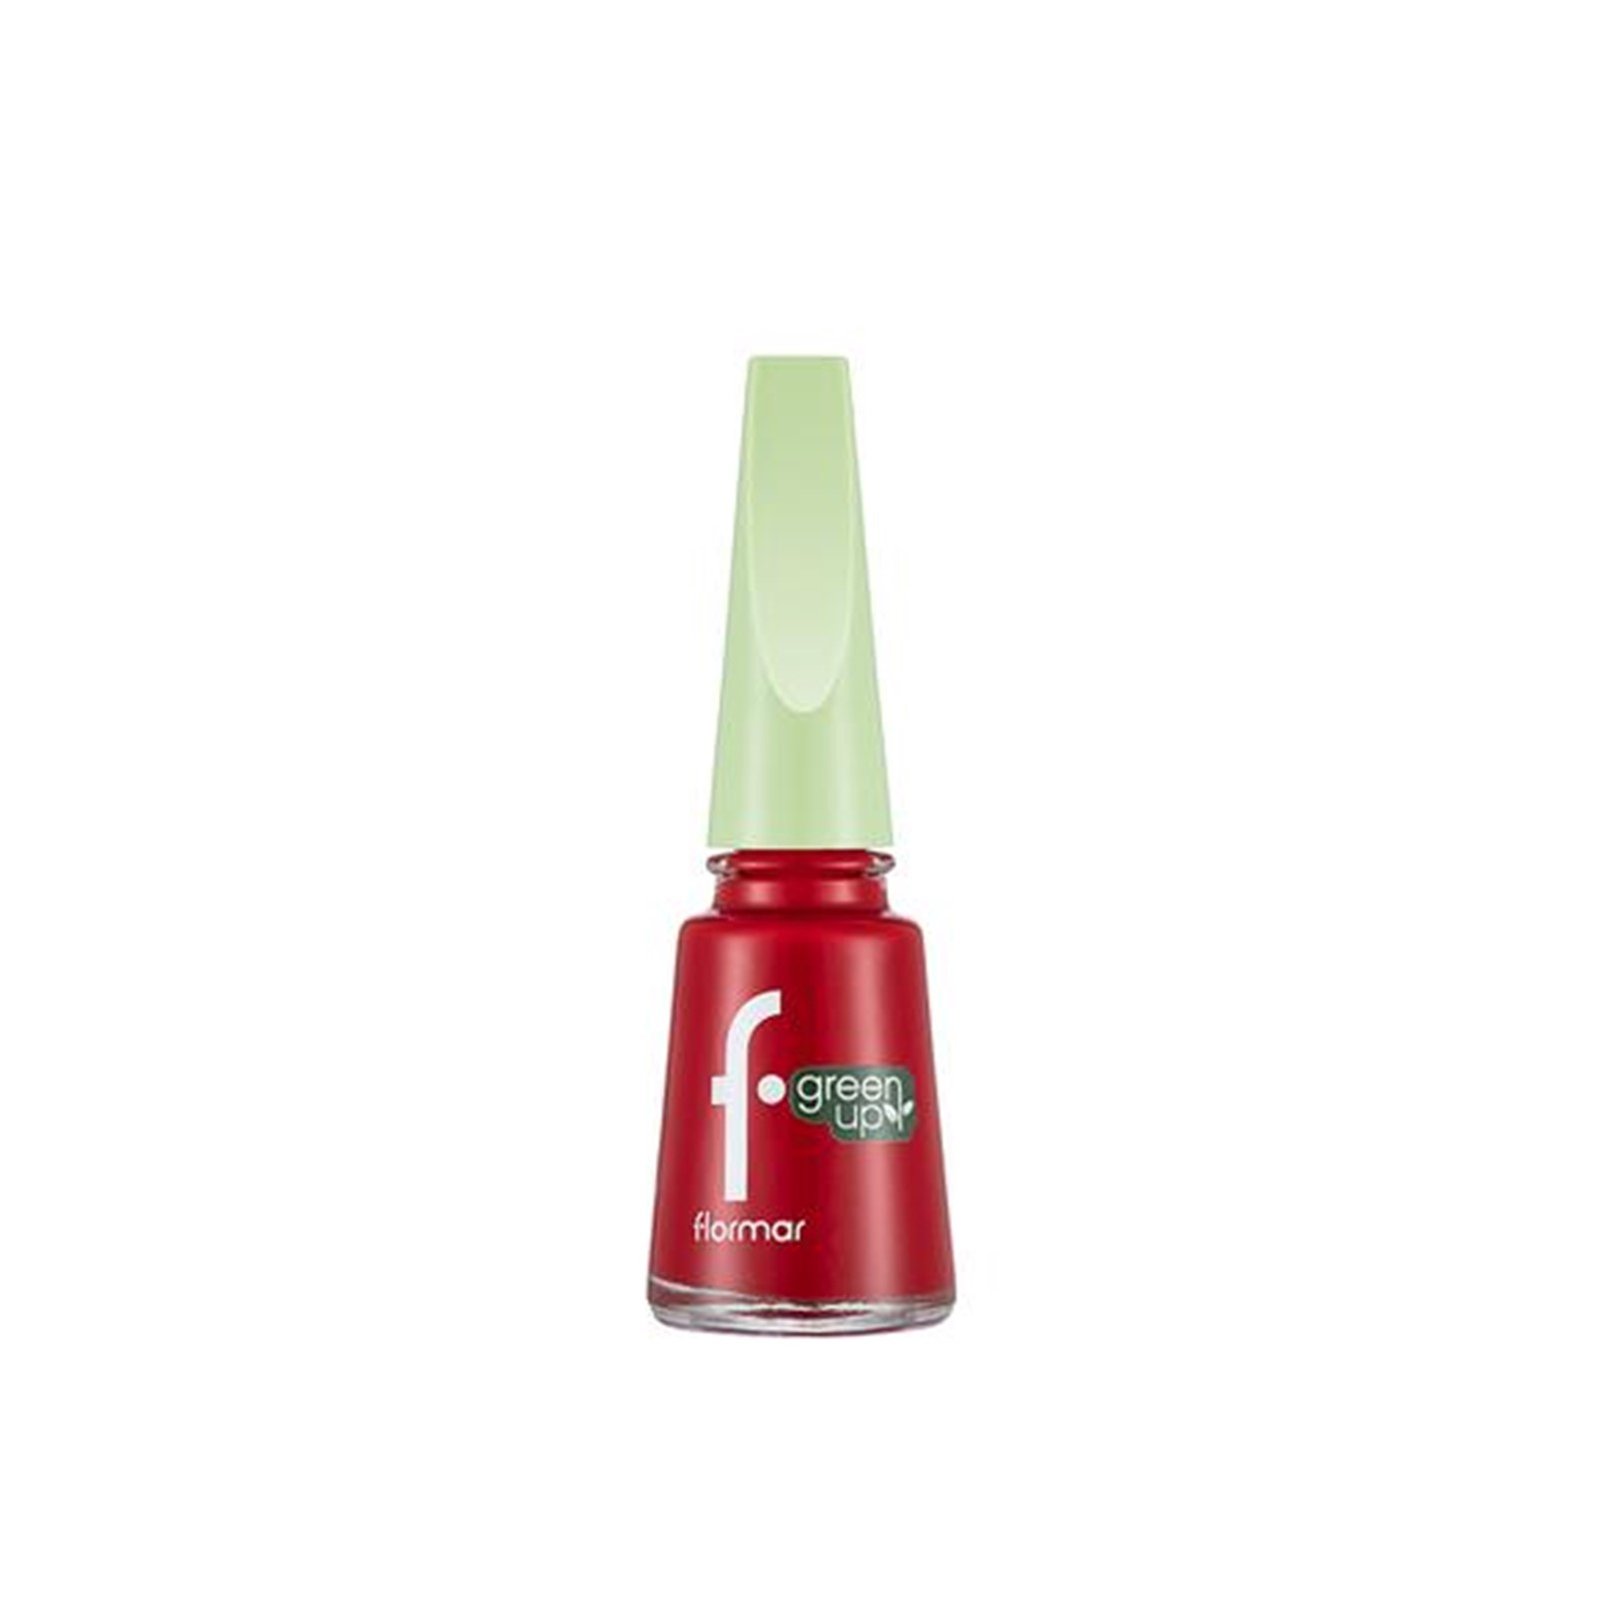 Flormar Green Up Nail Enamel 009 Red Apple 11ml (0.37 fl oz)